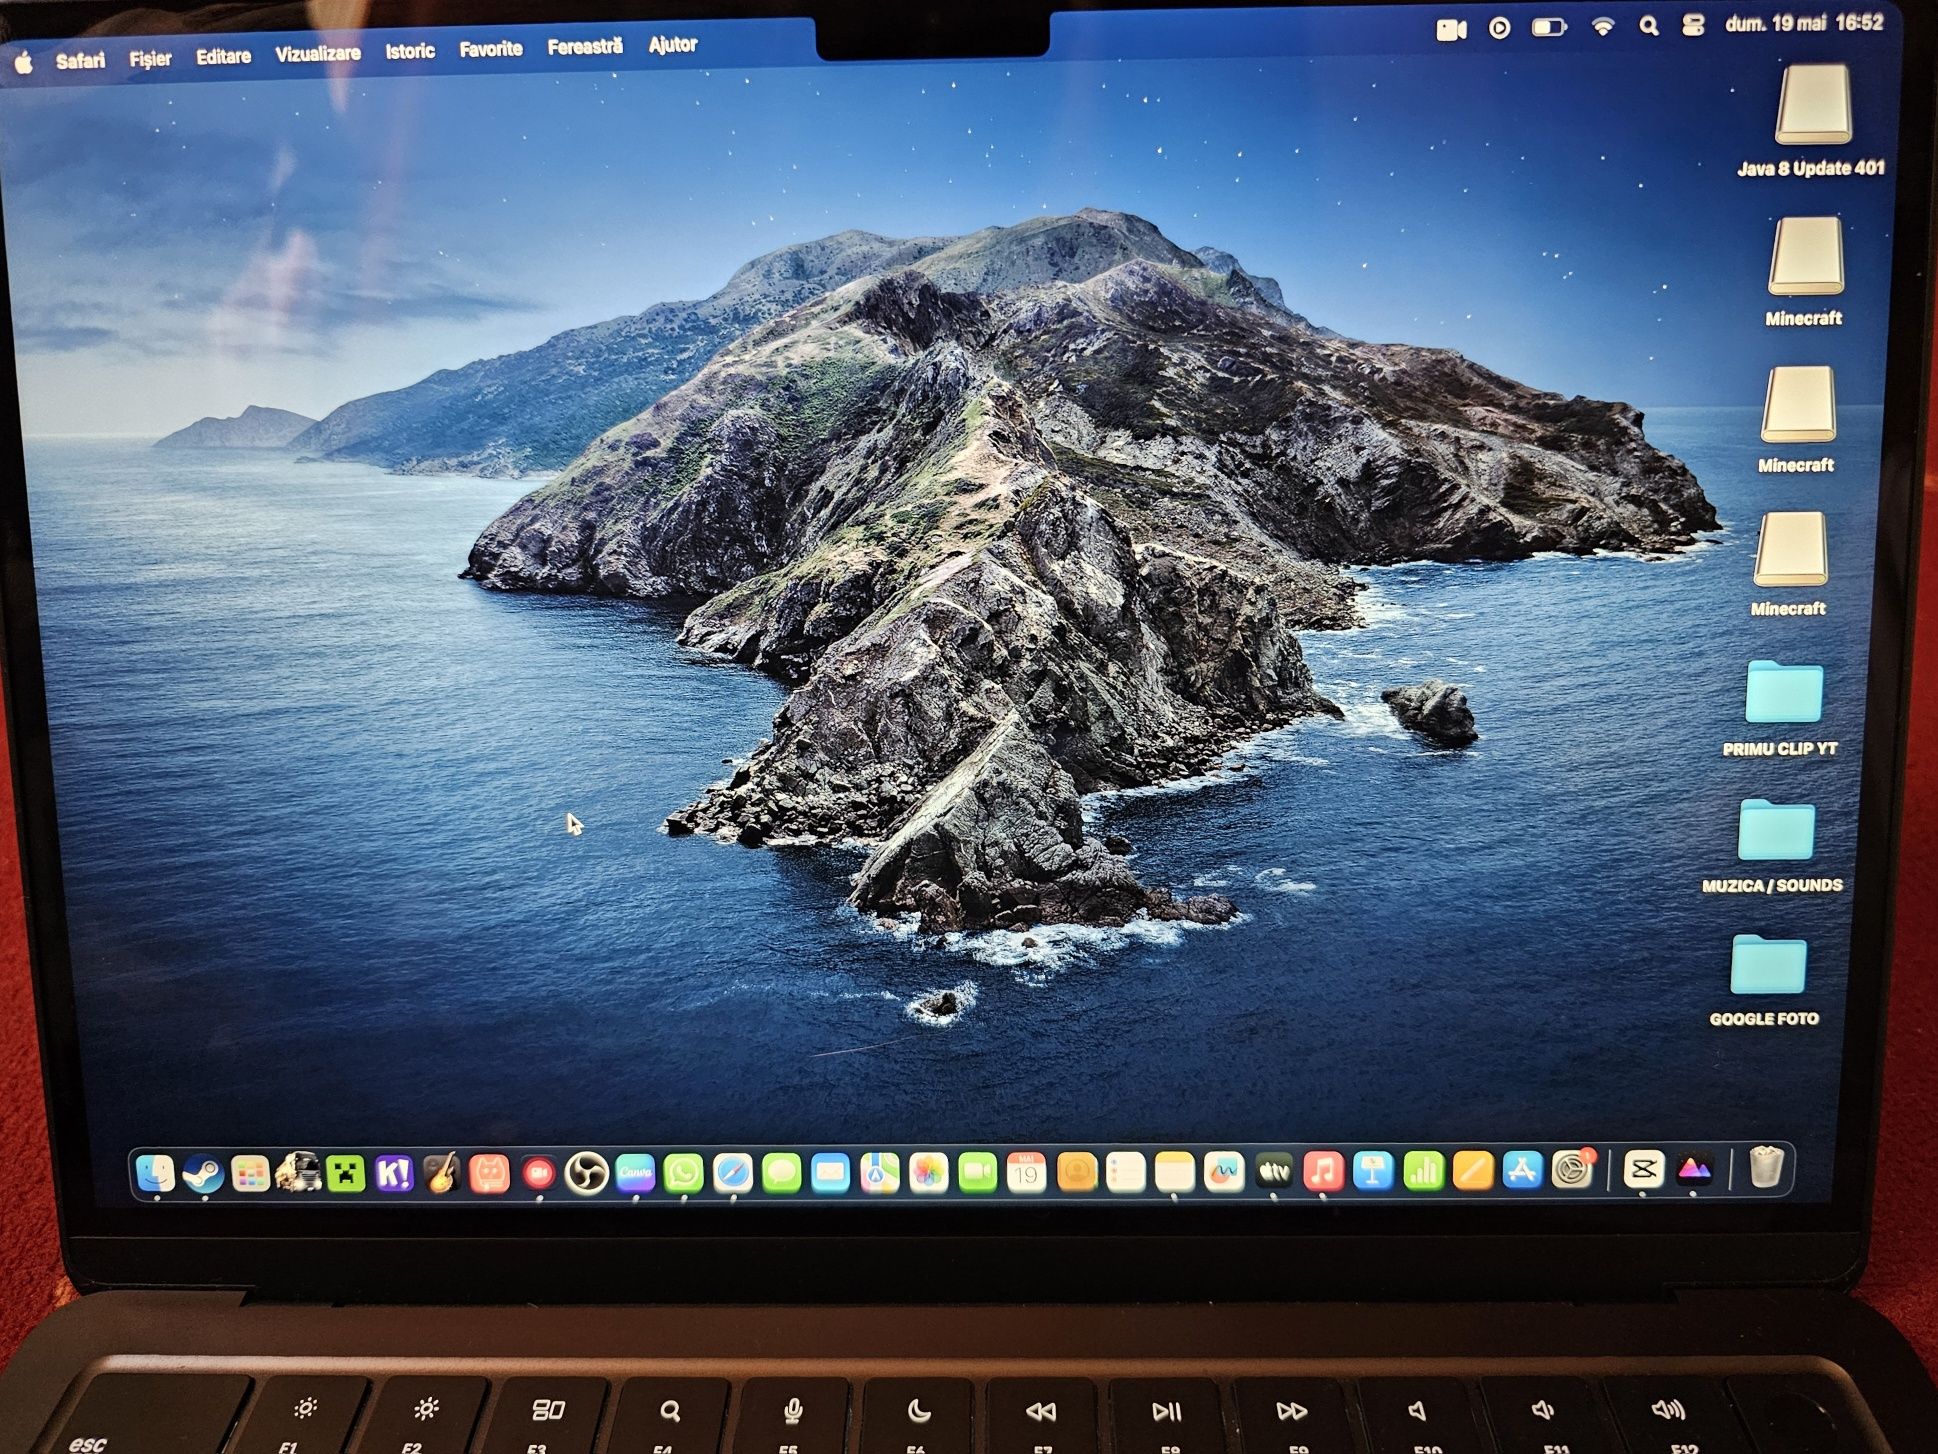 Laptop Apple MacBook Air 13-inch